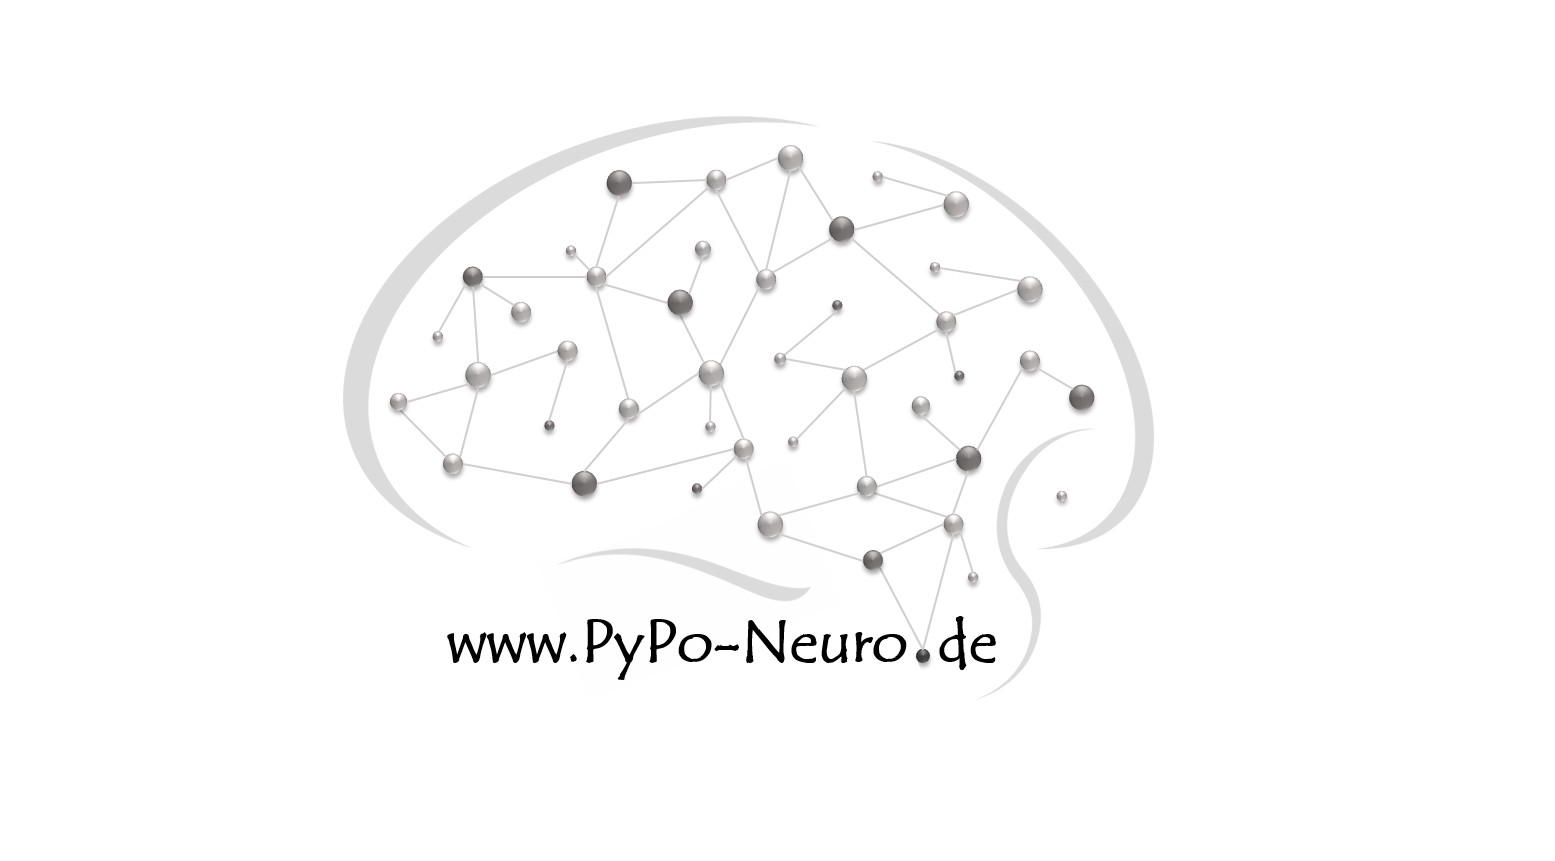 www.PyPo-Neuro.de